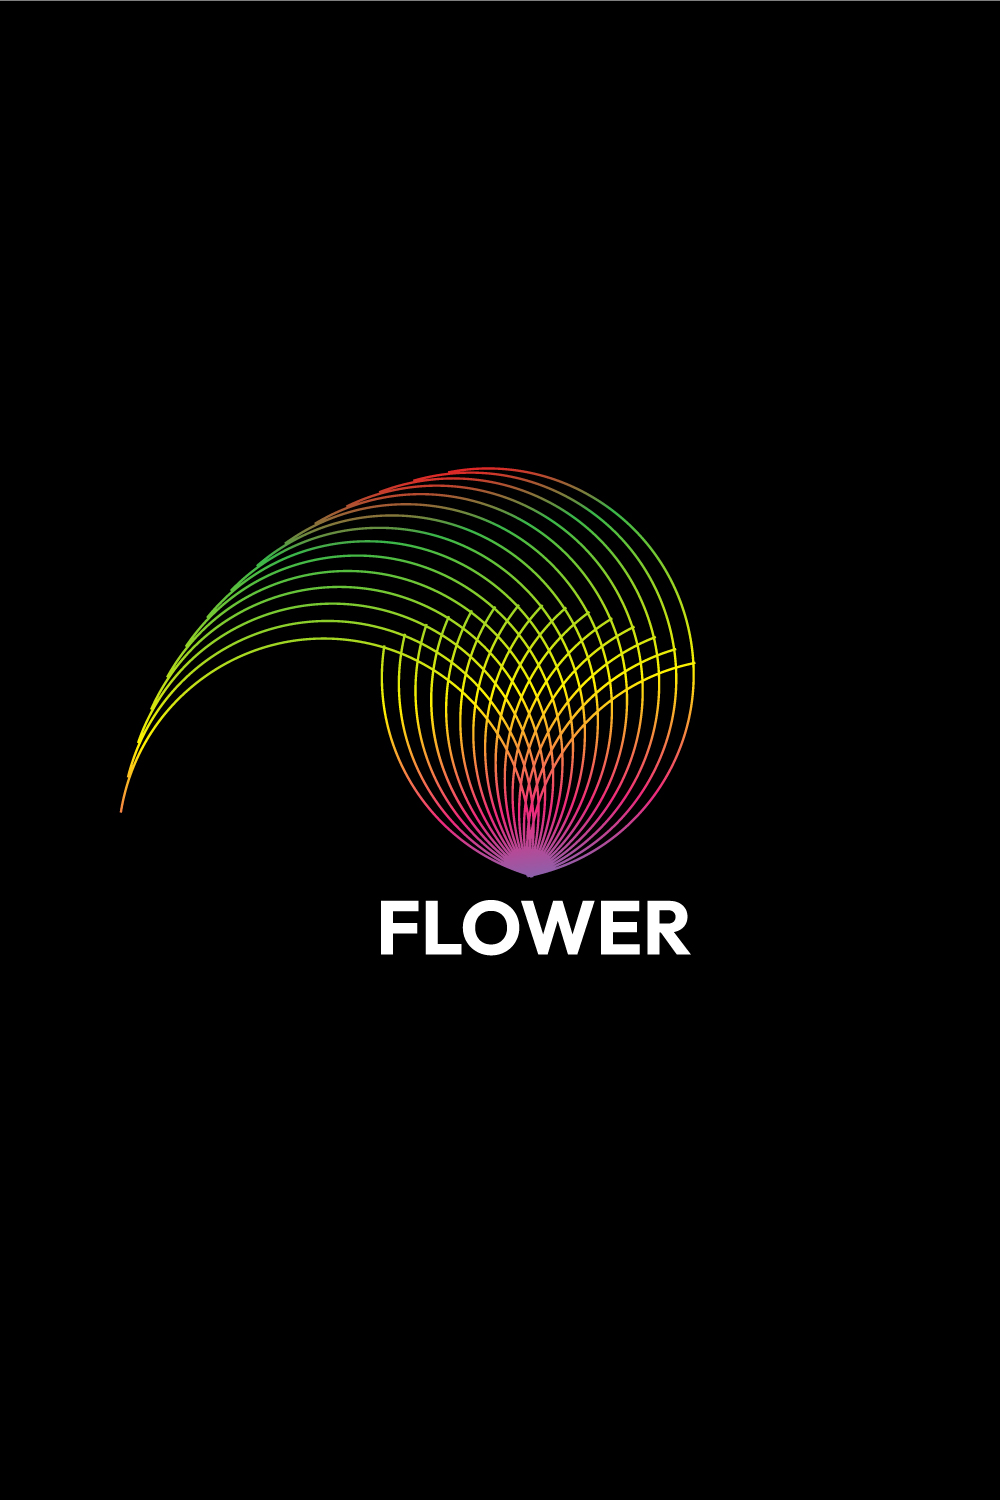 Elegant Line Art Flower Logo: Beauty & Fashion Design pinterest preview image.